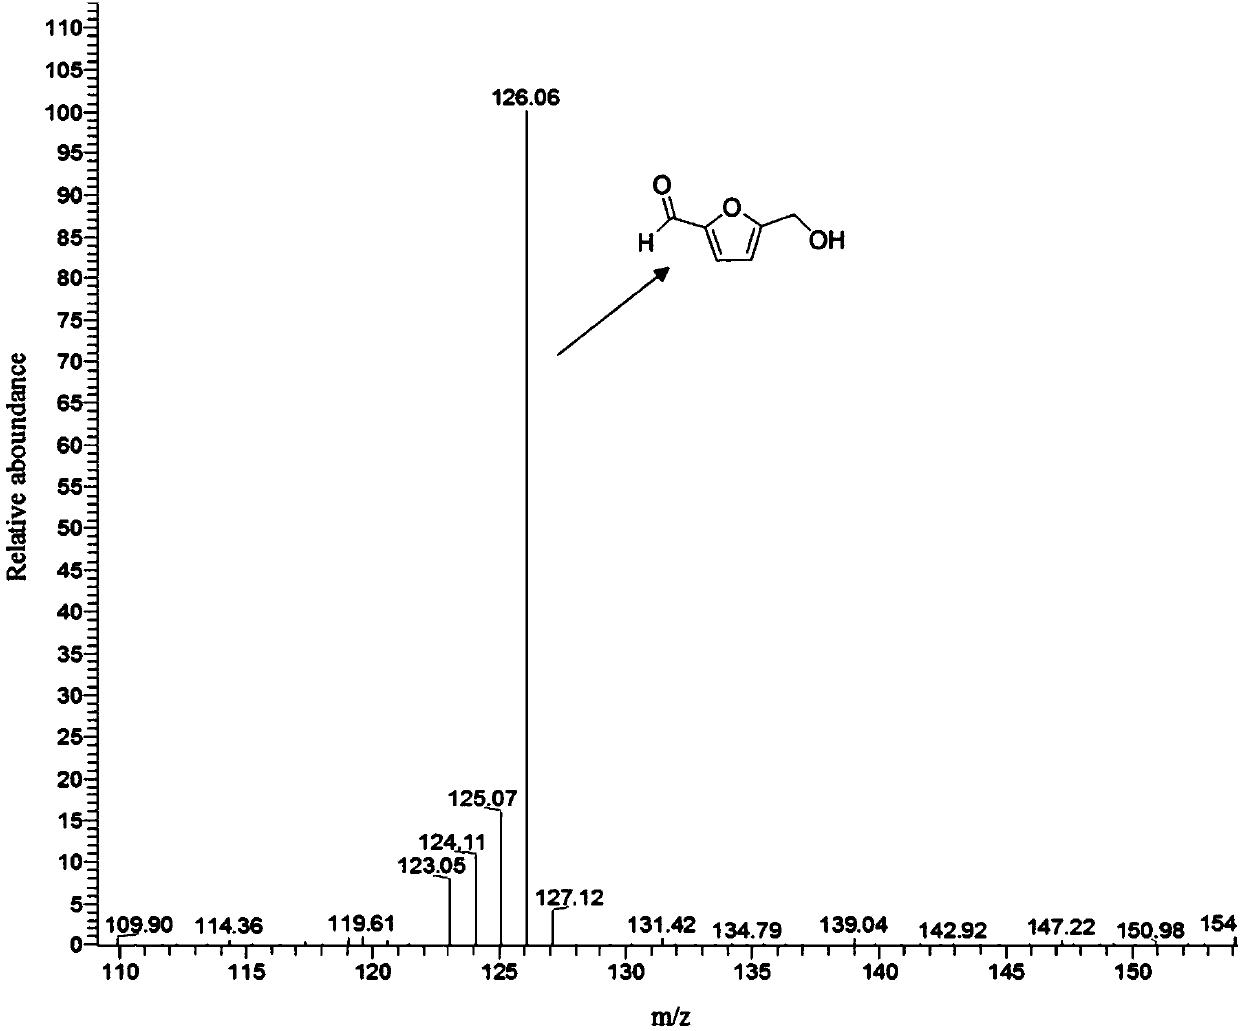 Method for preparing 5-hydroxymethyl furfural from glucose